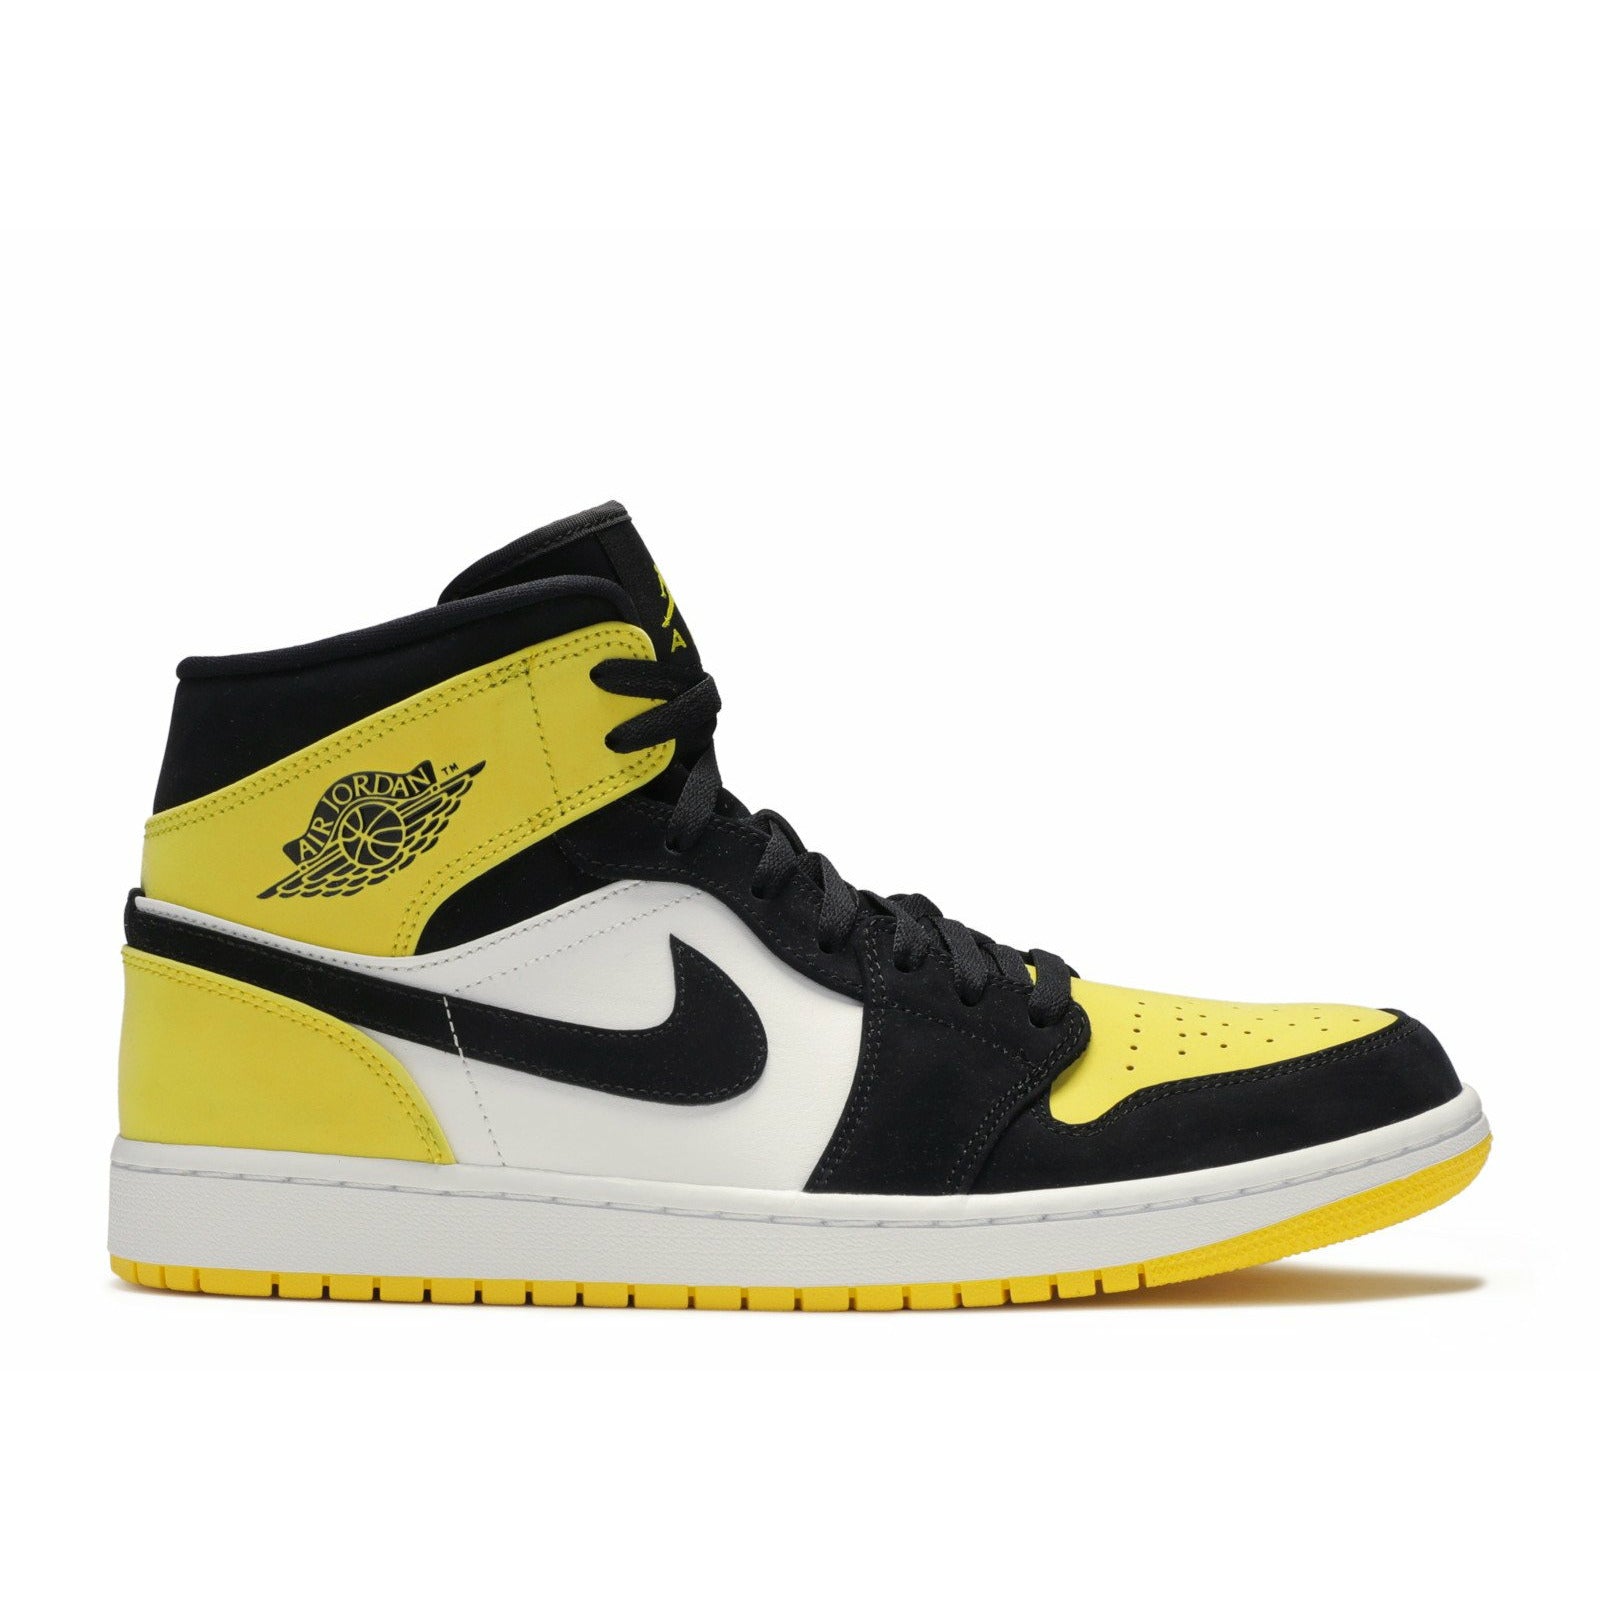 Air Jordan-Air Jordan 1 Mid "Yellow Toe"-Air Jordan 1 Mid "Yellow Toe" Sneakers
Product code: 853542-071 Colour: Black/Black-Tour Yellow-White Year of release: 2019
| MrSneaker is Europe's number 1 exclusive sneaker store.-mrsneaker